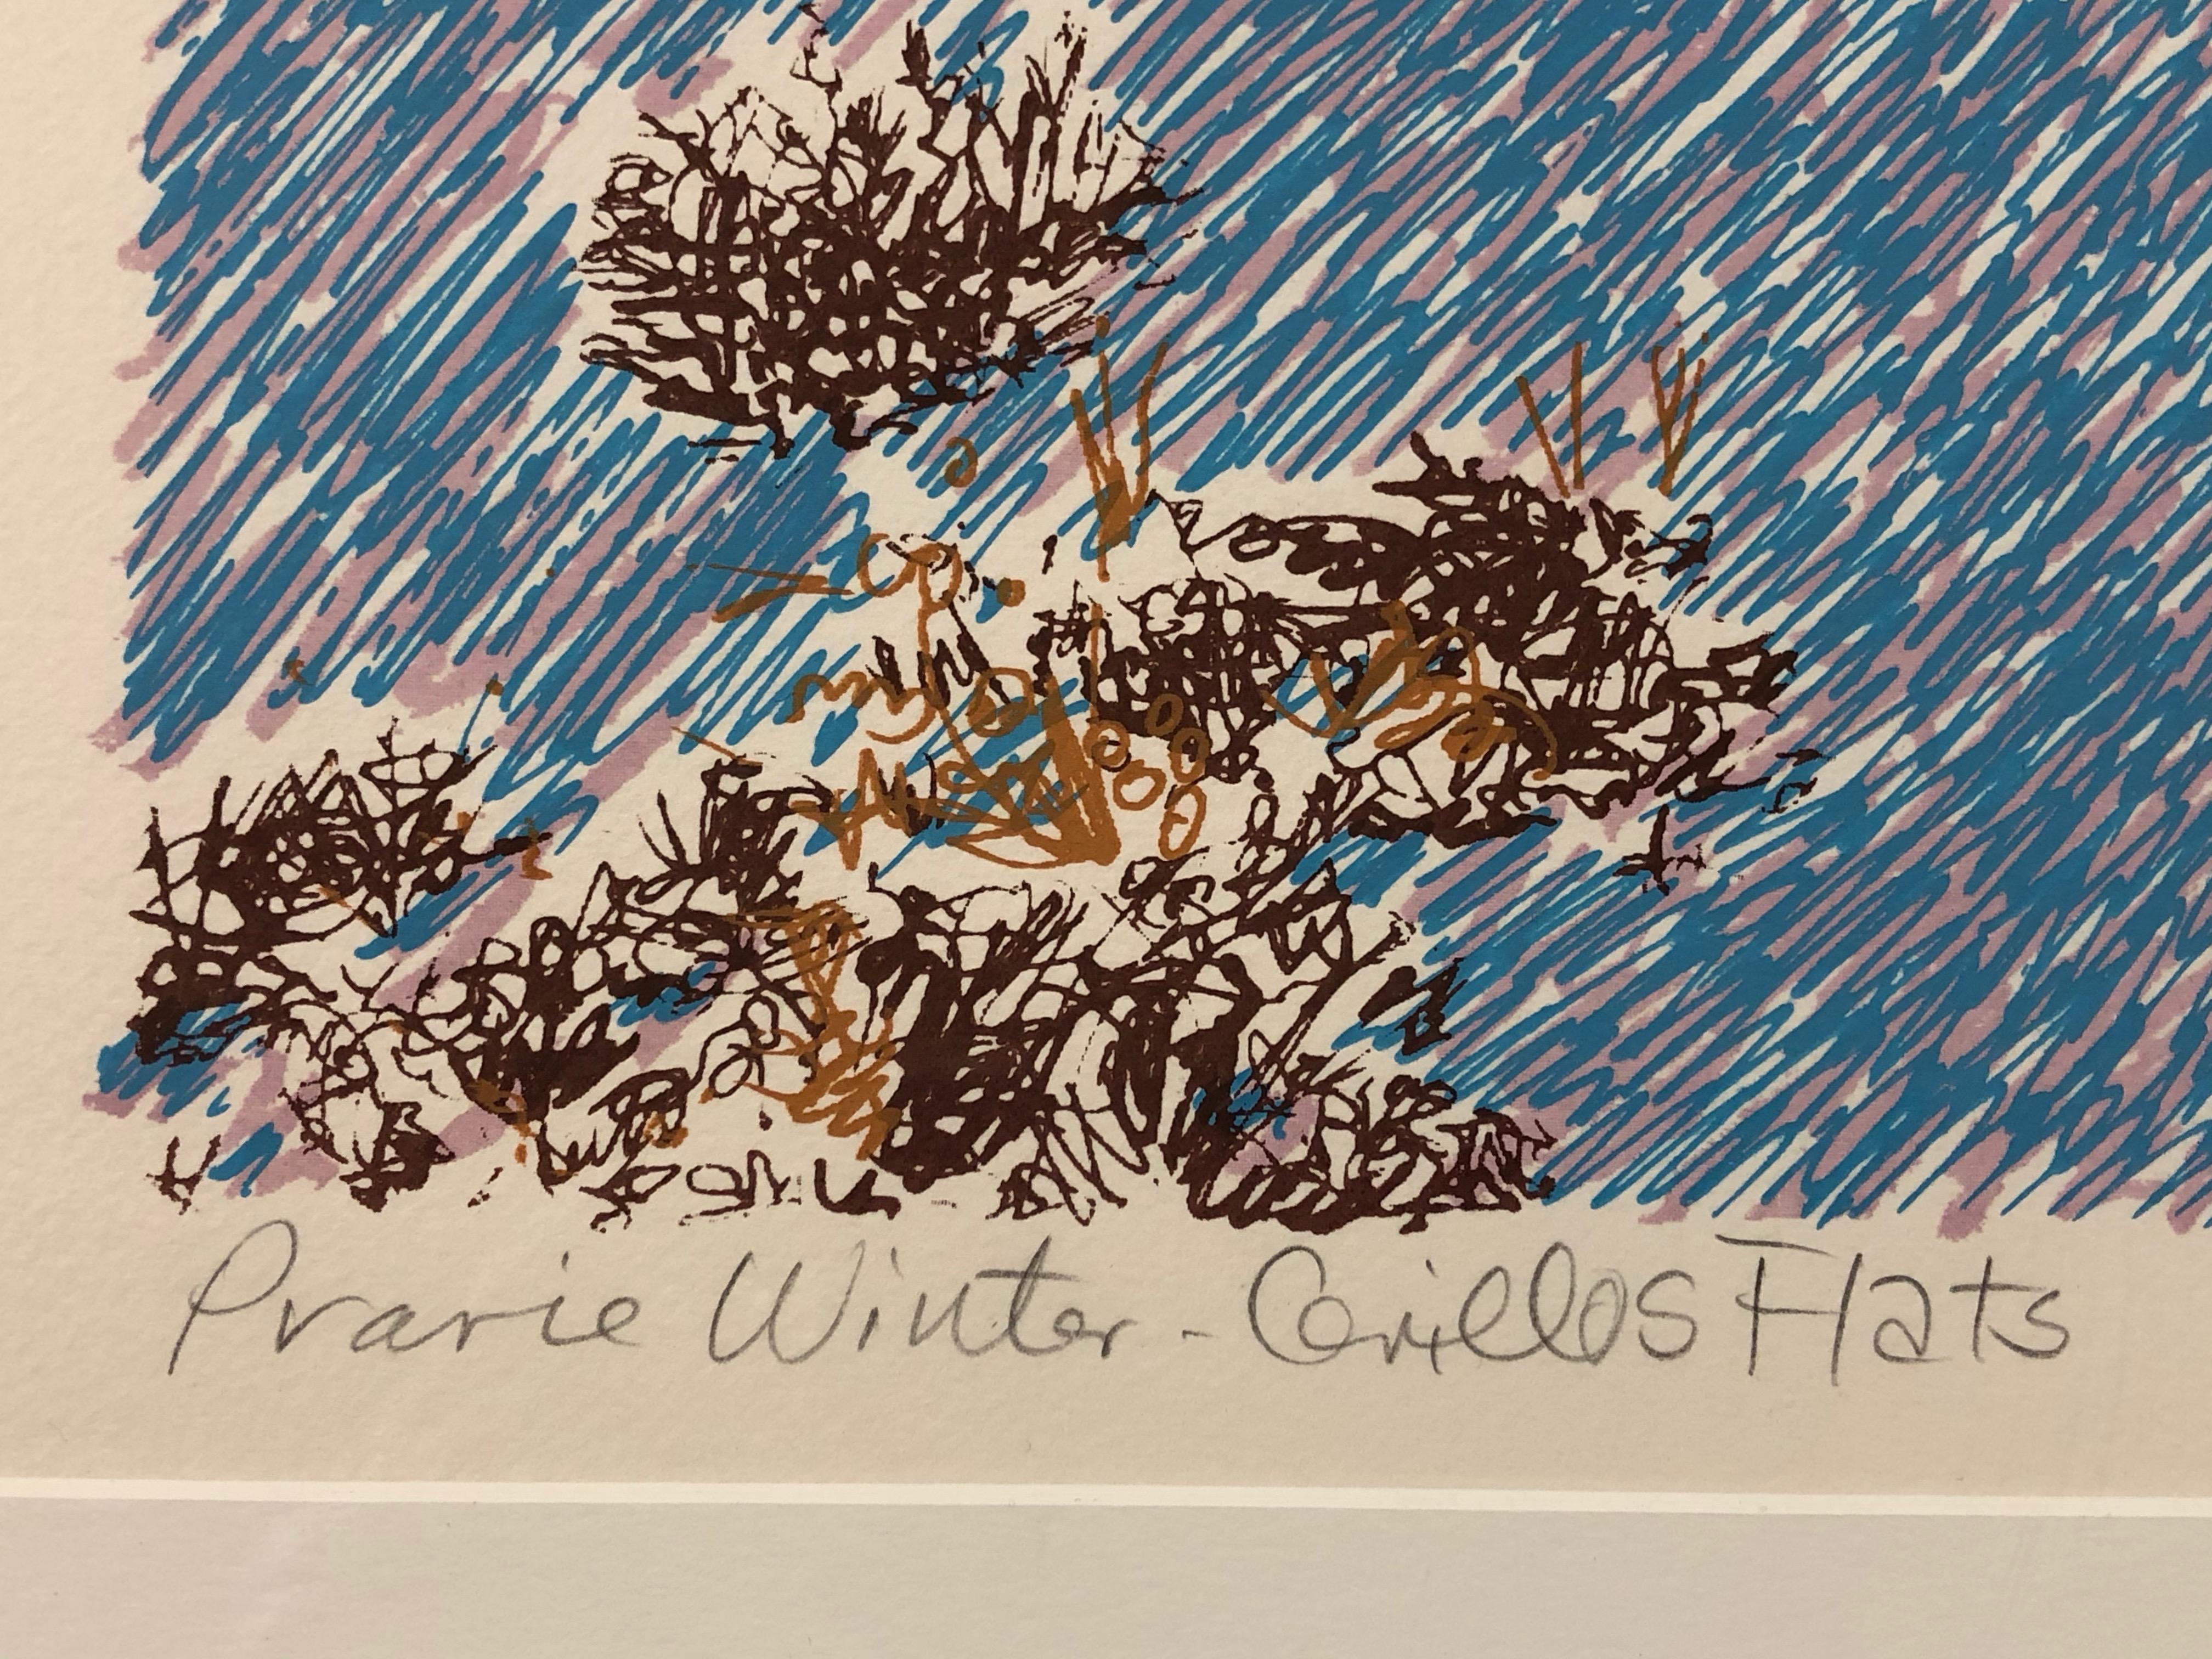 Prairie Winter - Cerrillos Flats, by John Hogan, serigraph, New Mexico Landscape For Sale 1